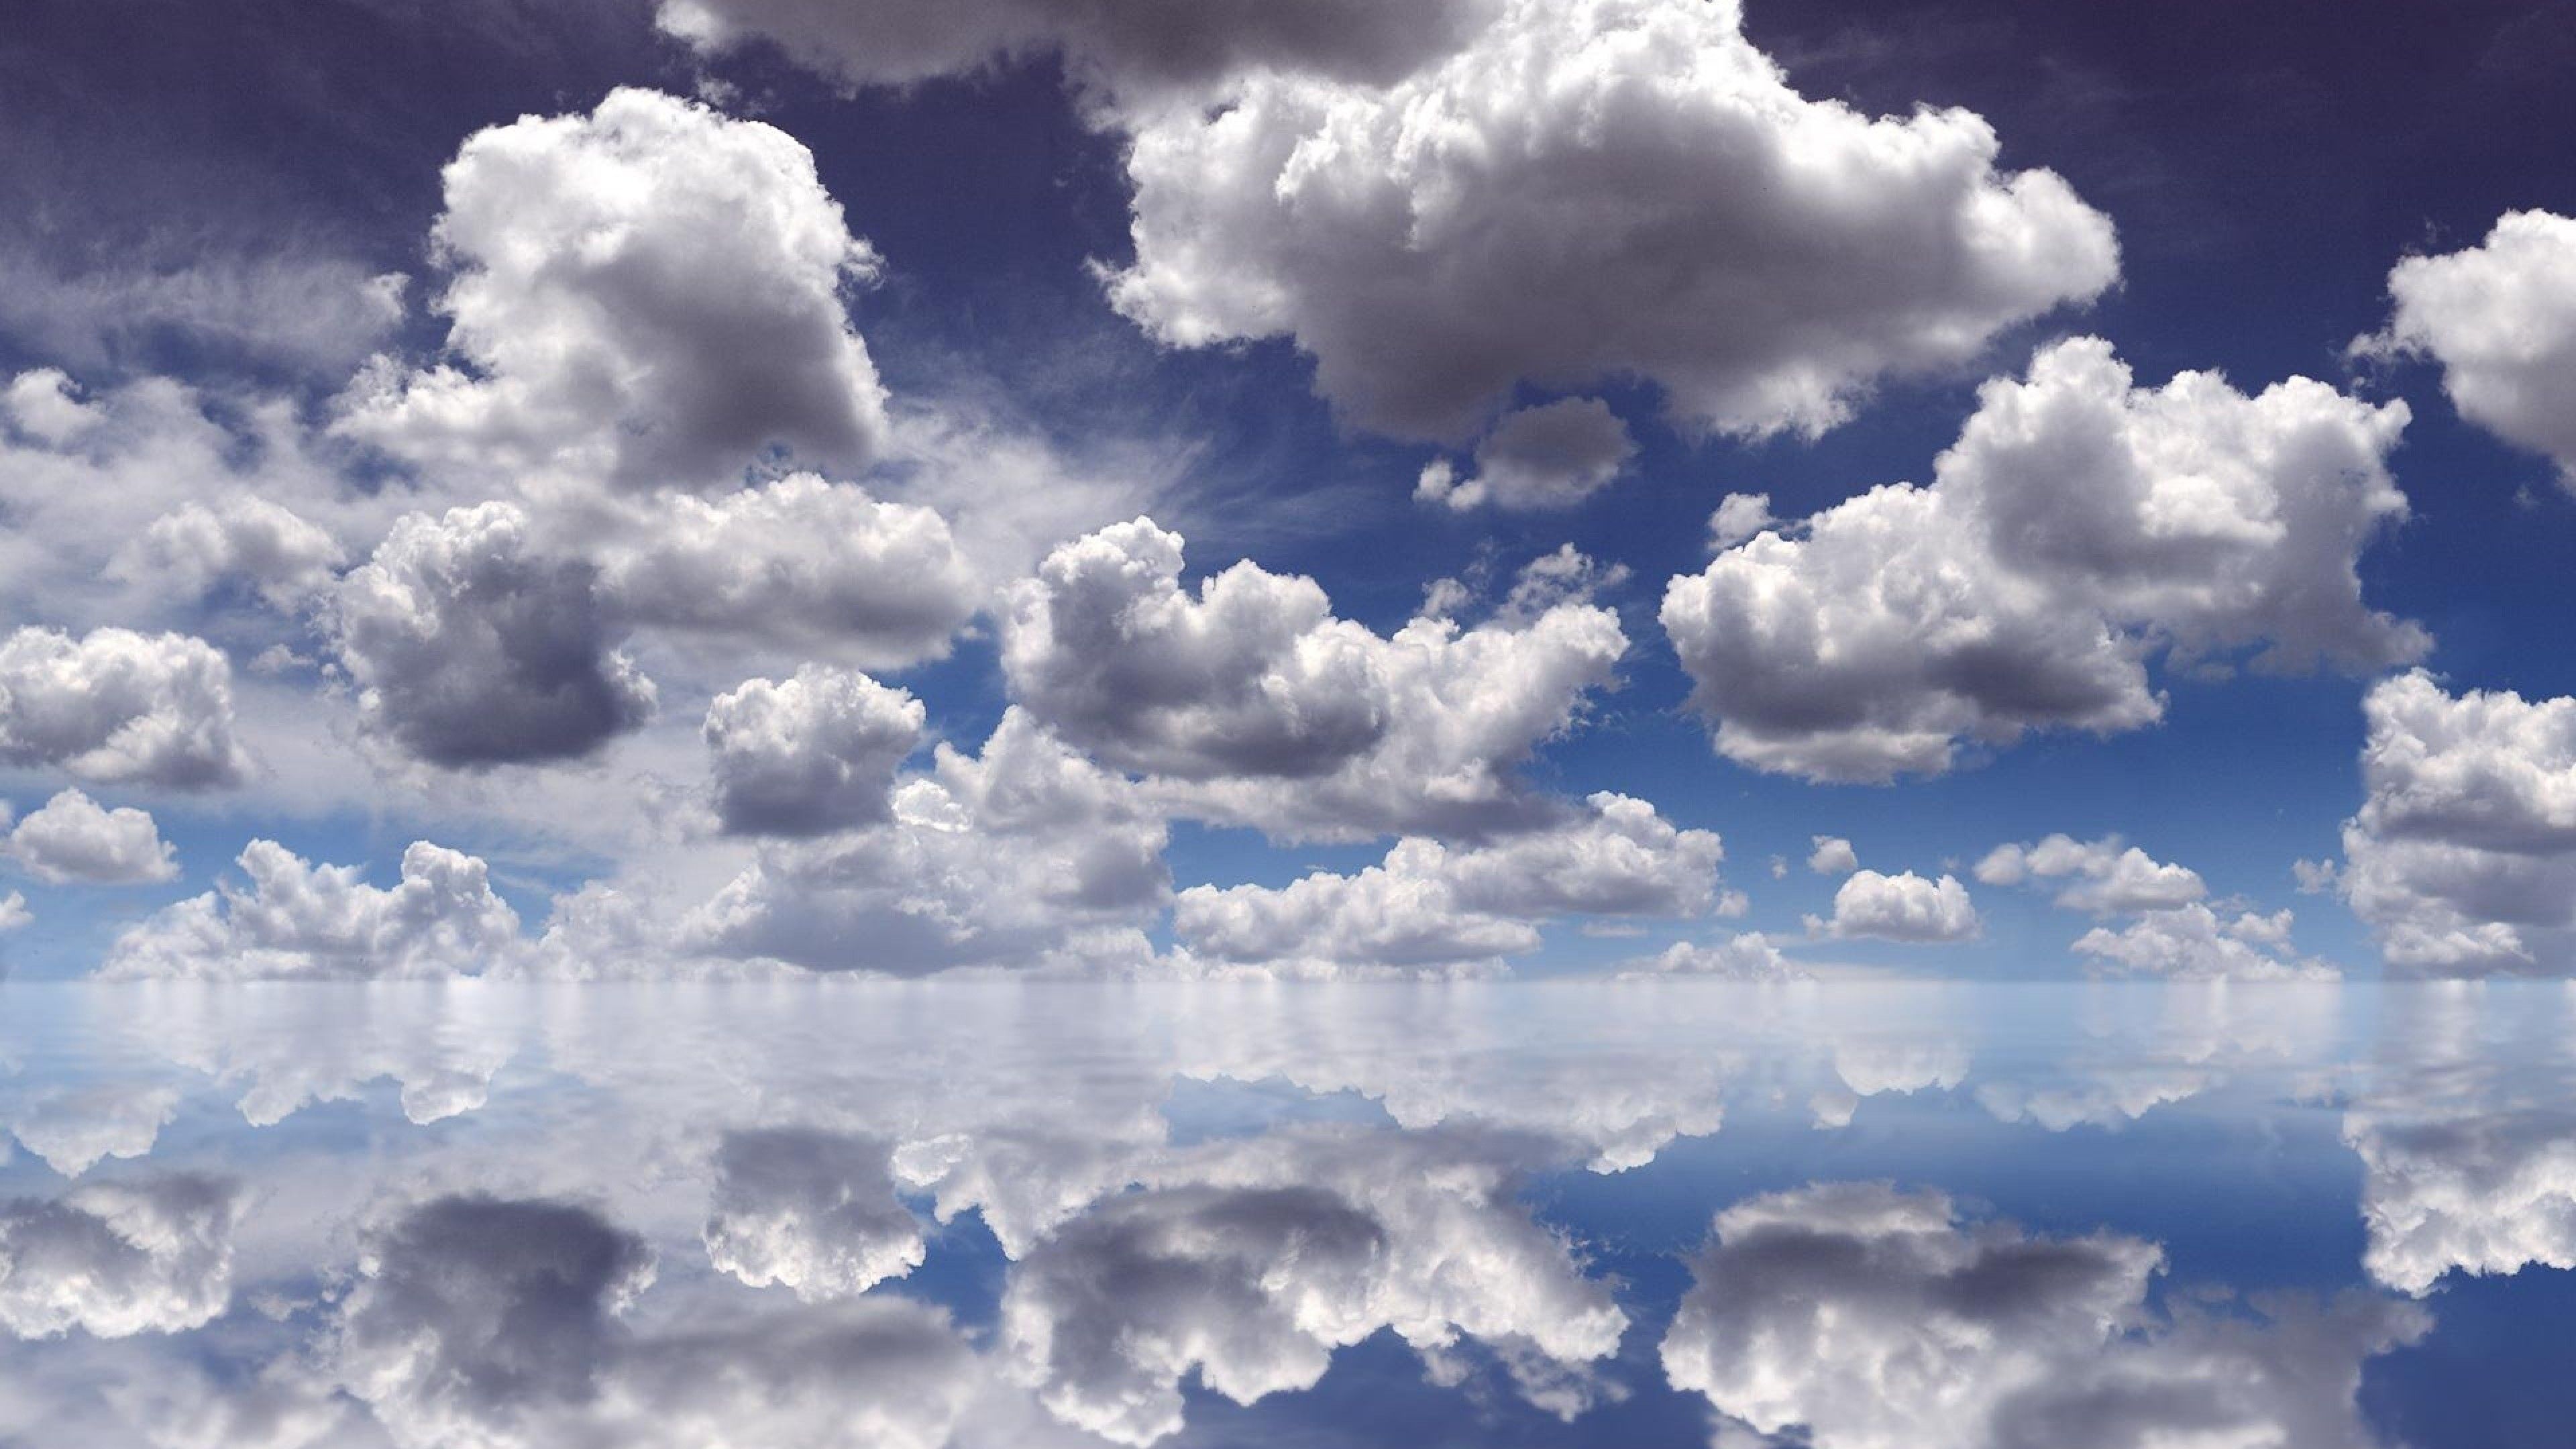 Aesthetic Cloud Wallpapers for Desktop 